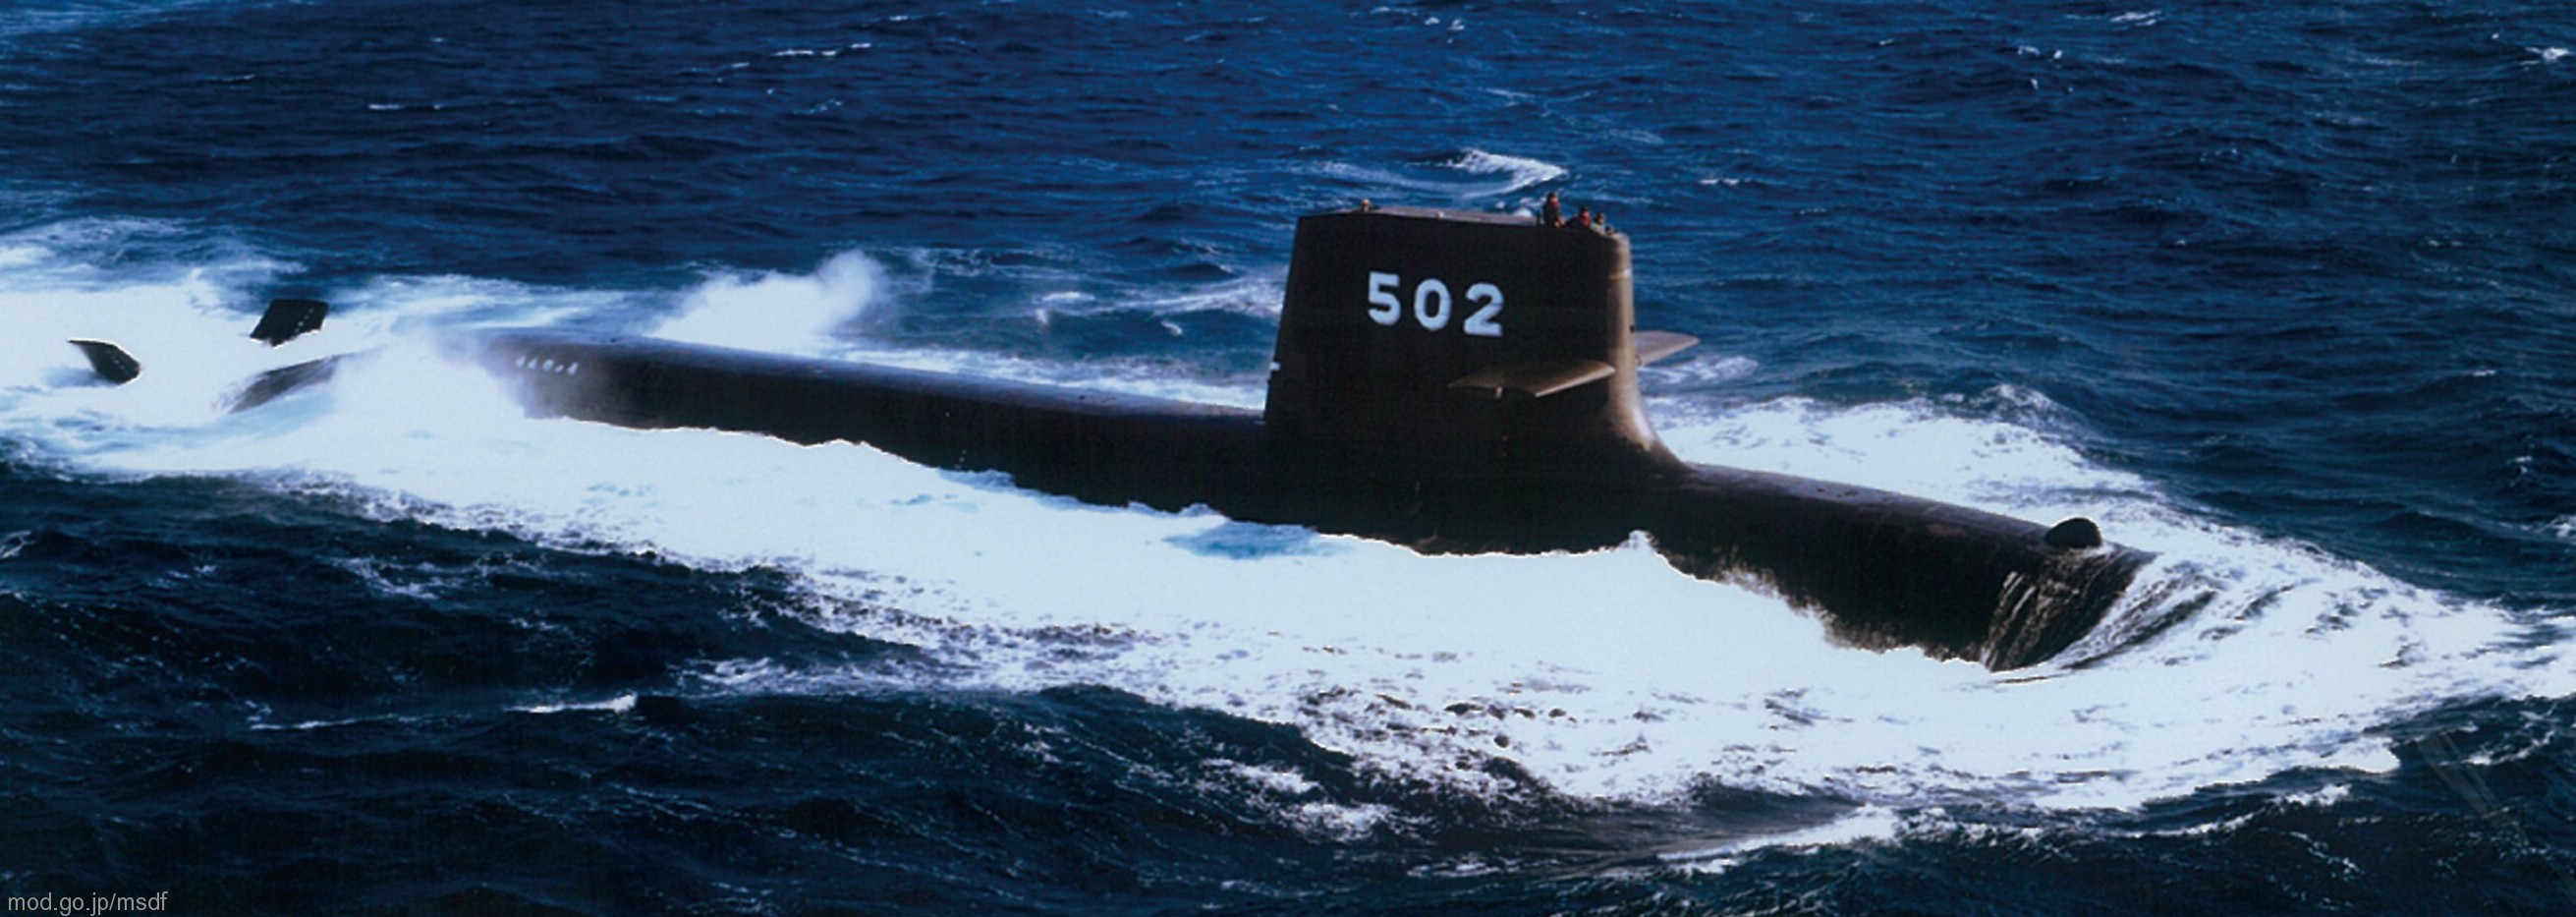 ss-502 js unryu 16ss class attack submarine ssk japan maritime self defense force jmsdf 07